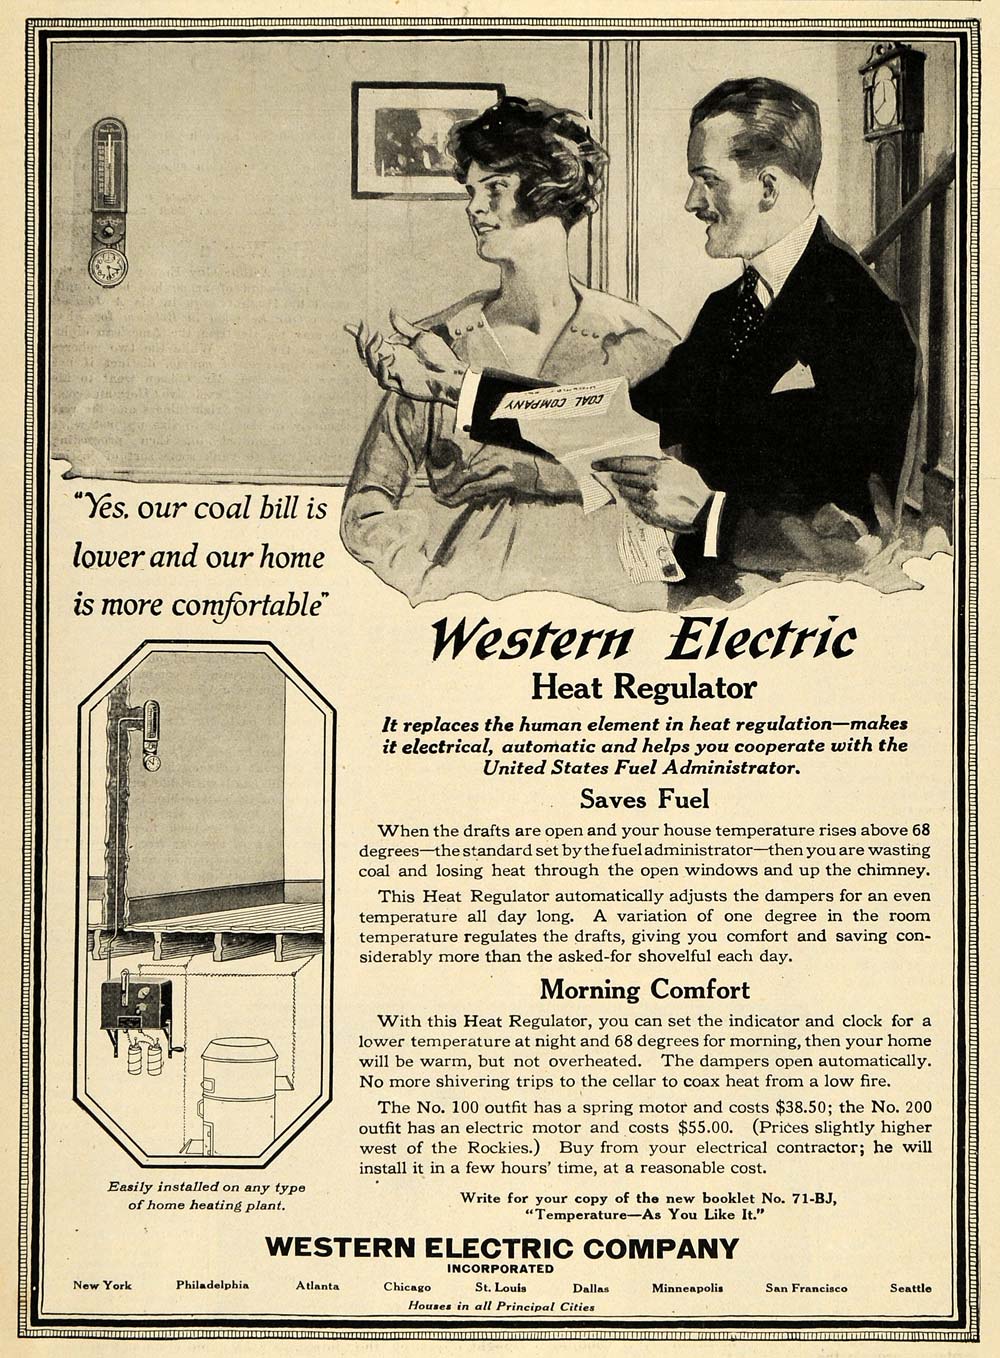 1918 Ad Western Electric Heat Regulator No 100 Outfit - ORIGINAL TIN2